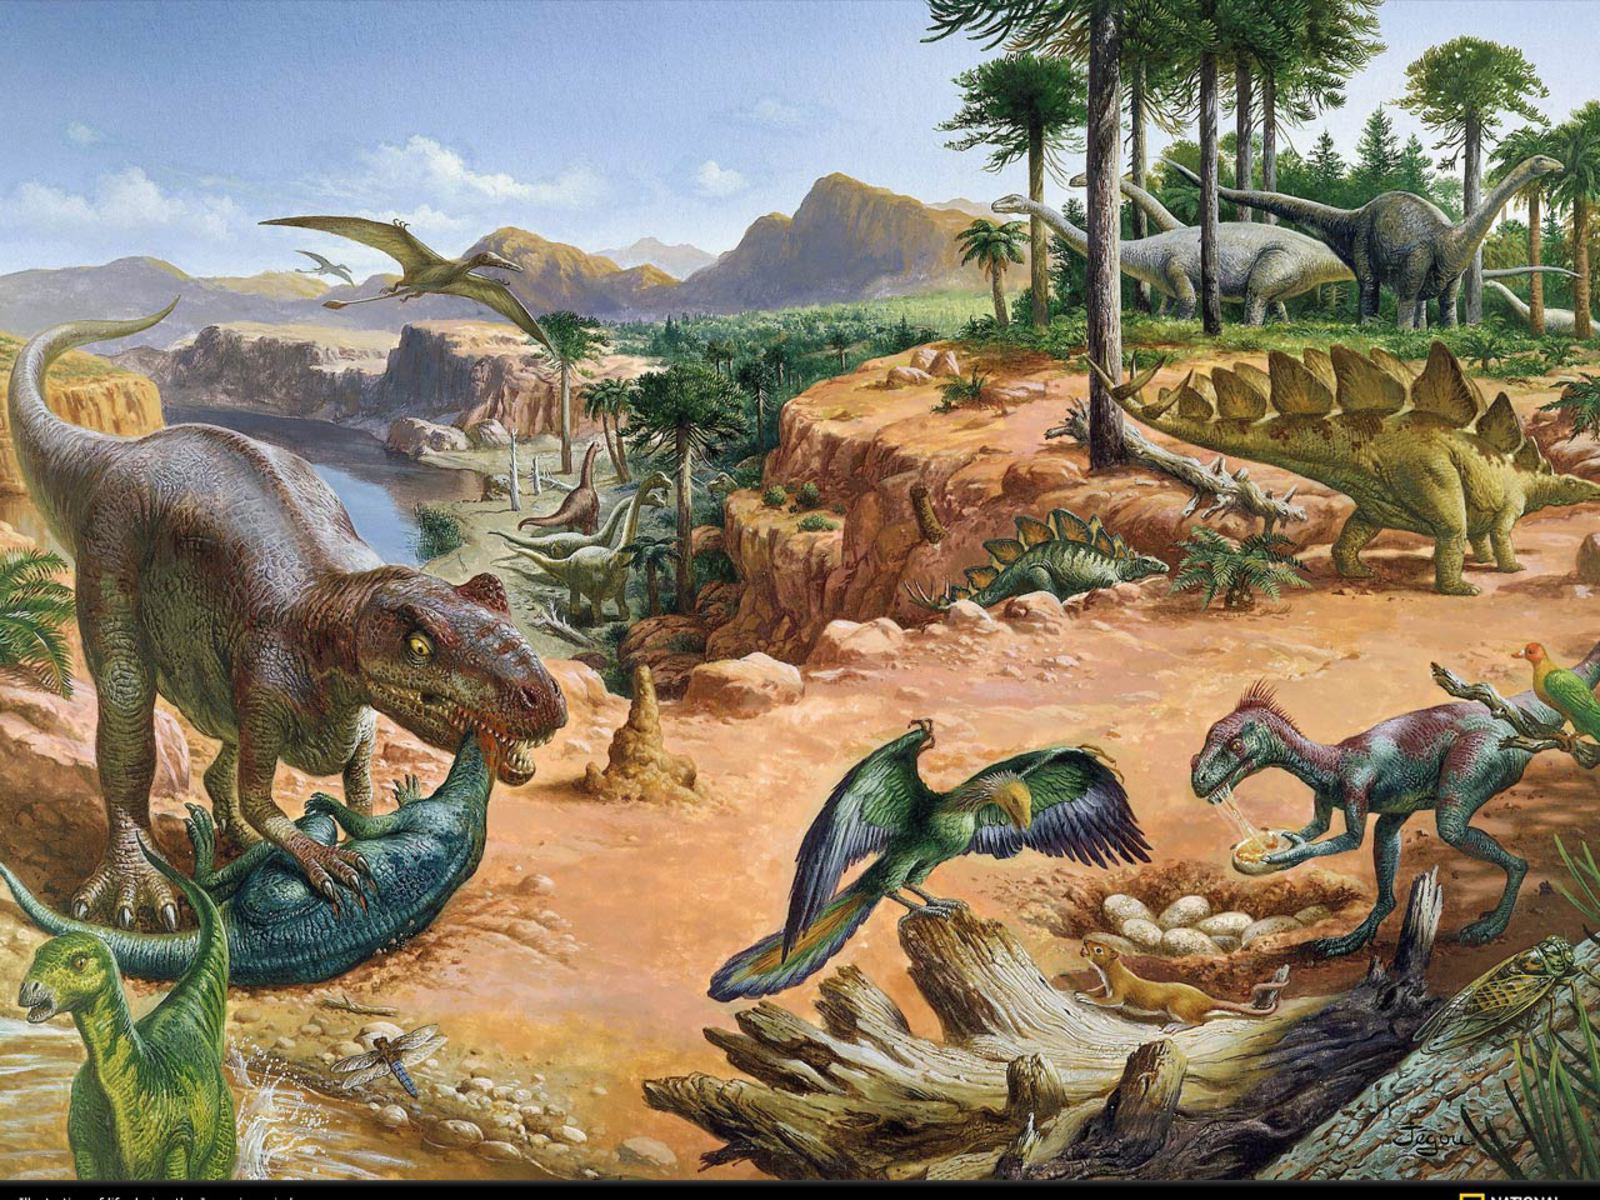 Desktop wallpaper featuring a majestic dinosaur - a captivating glimpse into the prehistoric world.